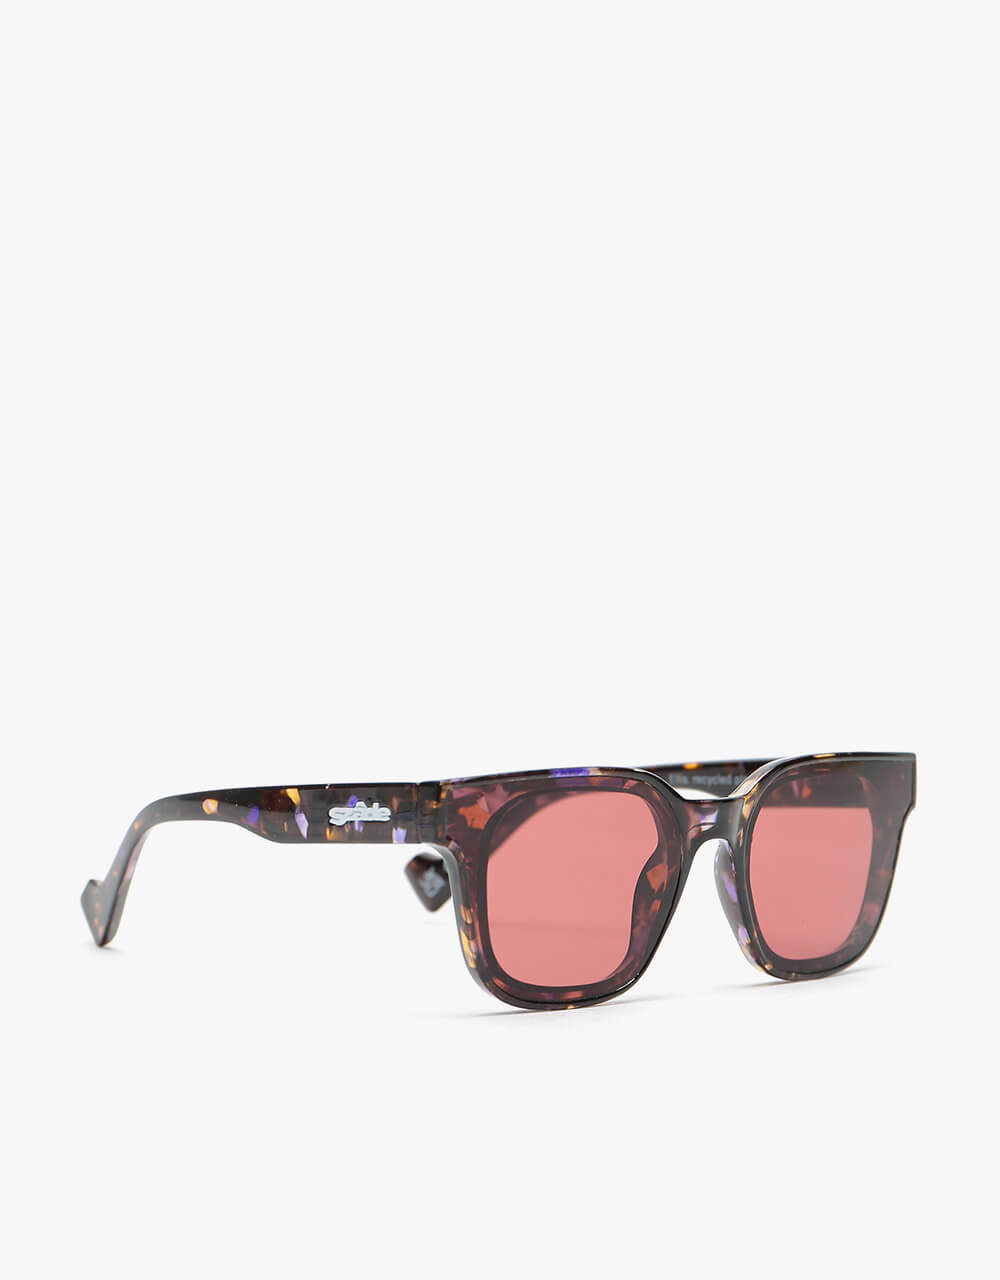 Szade Ellis Recycled Sunglasses - Blackberry/Charcoal